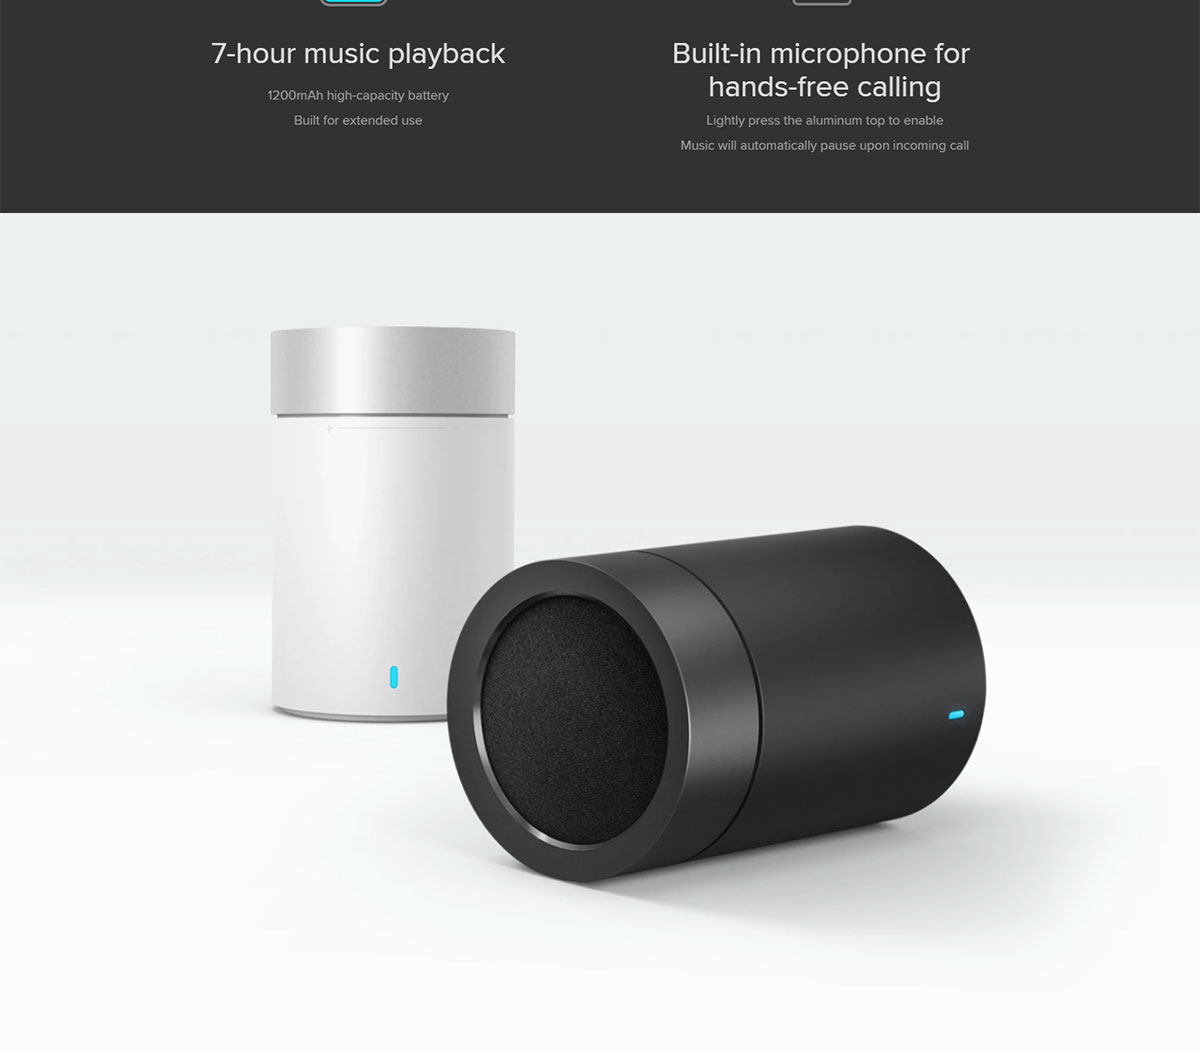 Original-Xiaomi-Mi-Pocket-Speaker-2-Portable-Wireless-bluetooth-Speaker-Global-Version-Music-Soundba-1639515